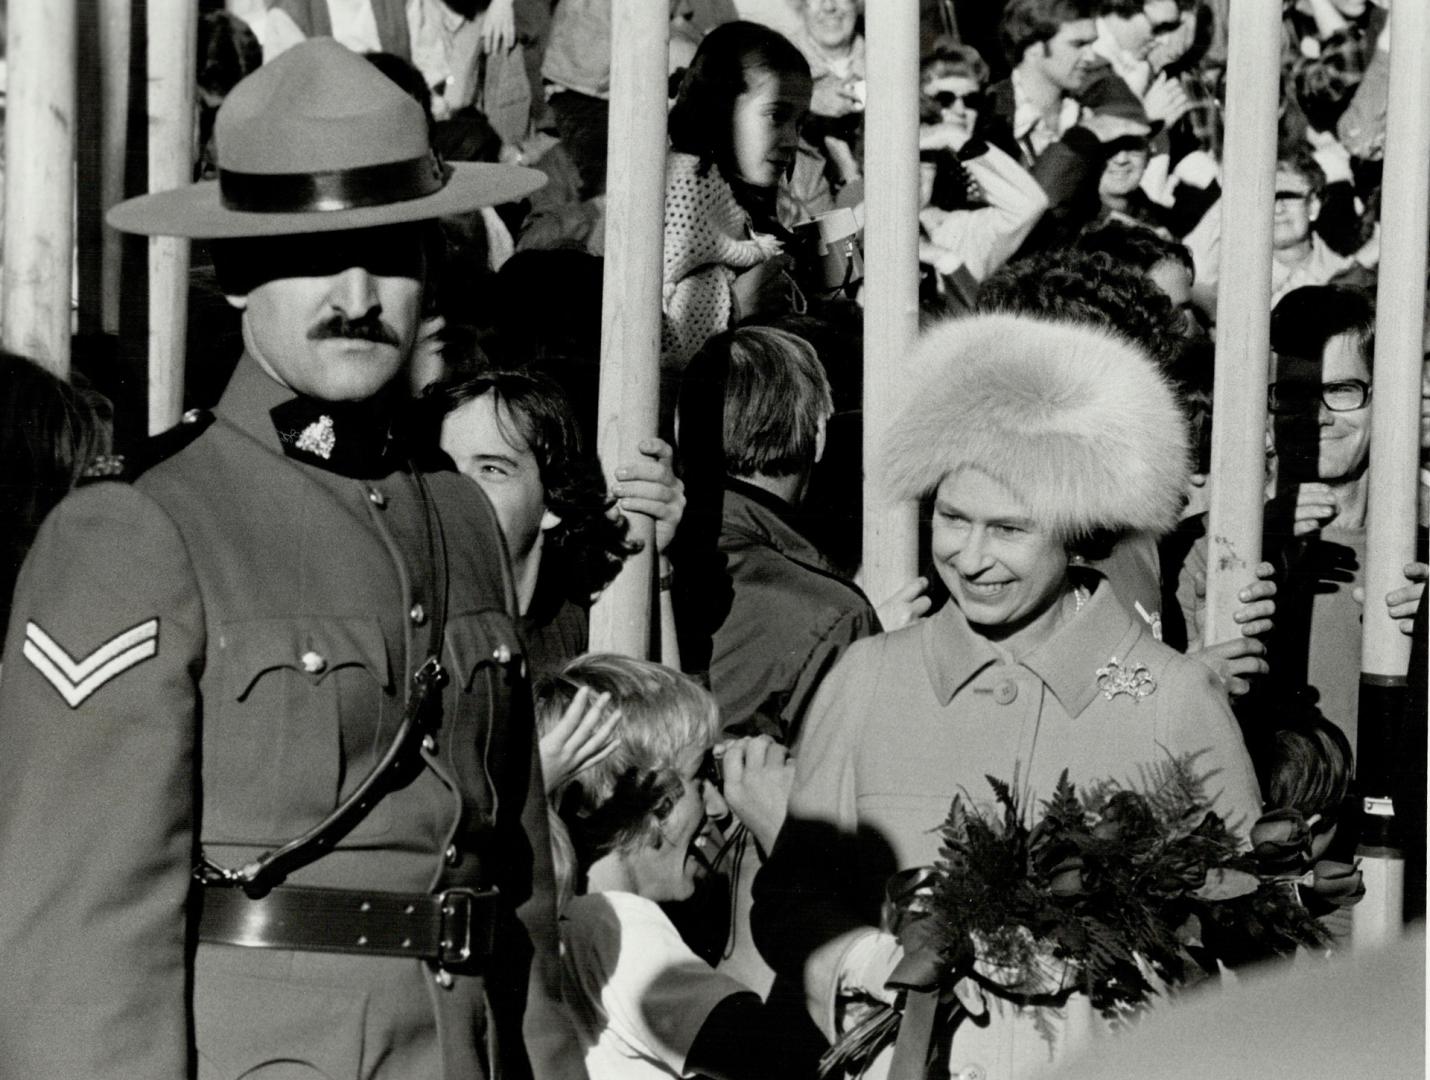 Royal Tours - Queen Elizabeth and Prince Philip (Canada 1977) Ottawa (Unused Photos)